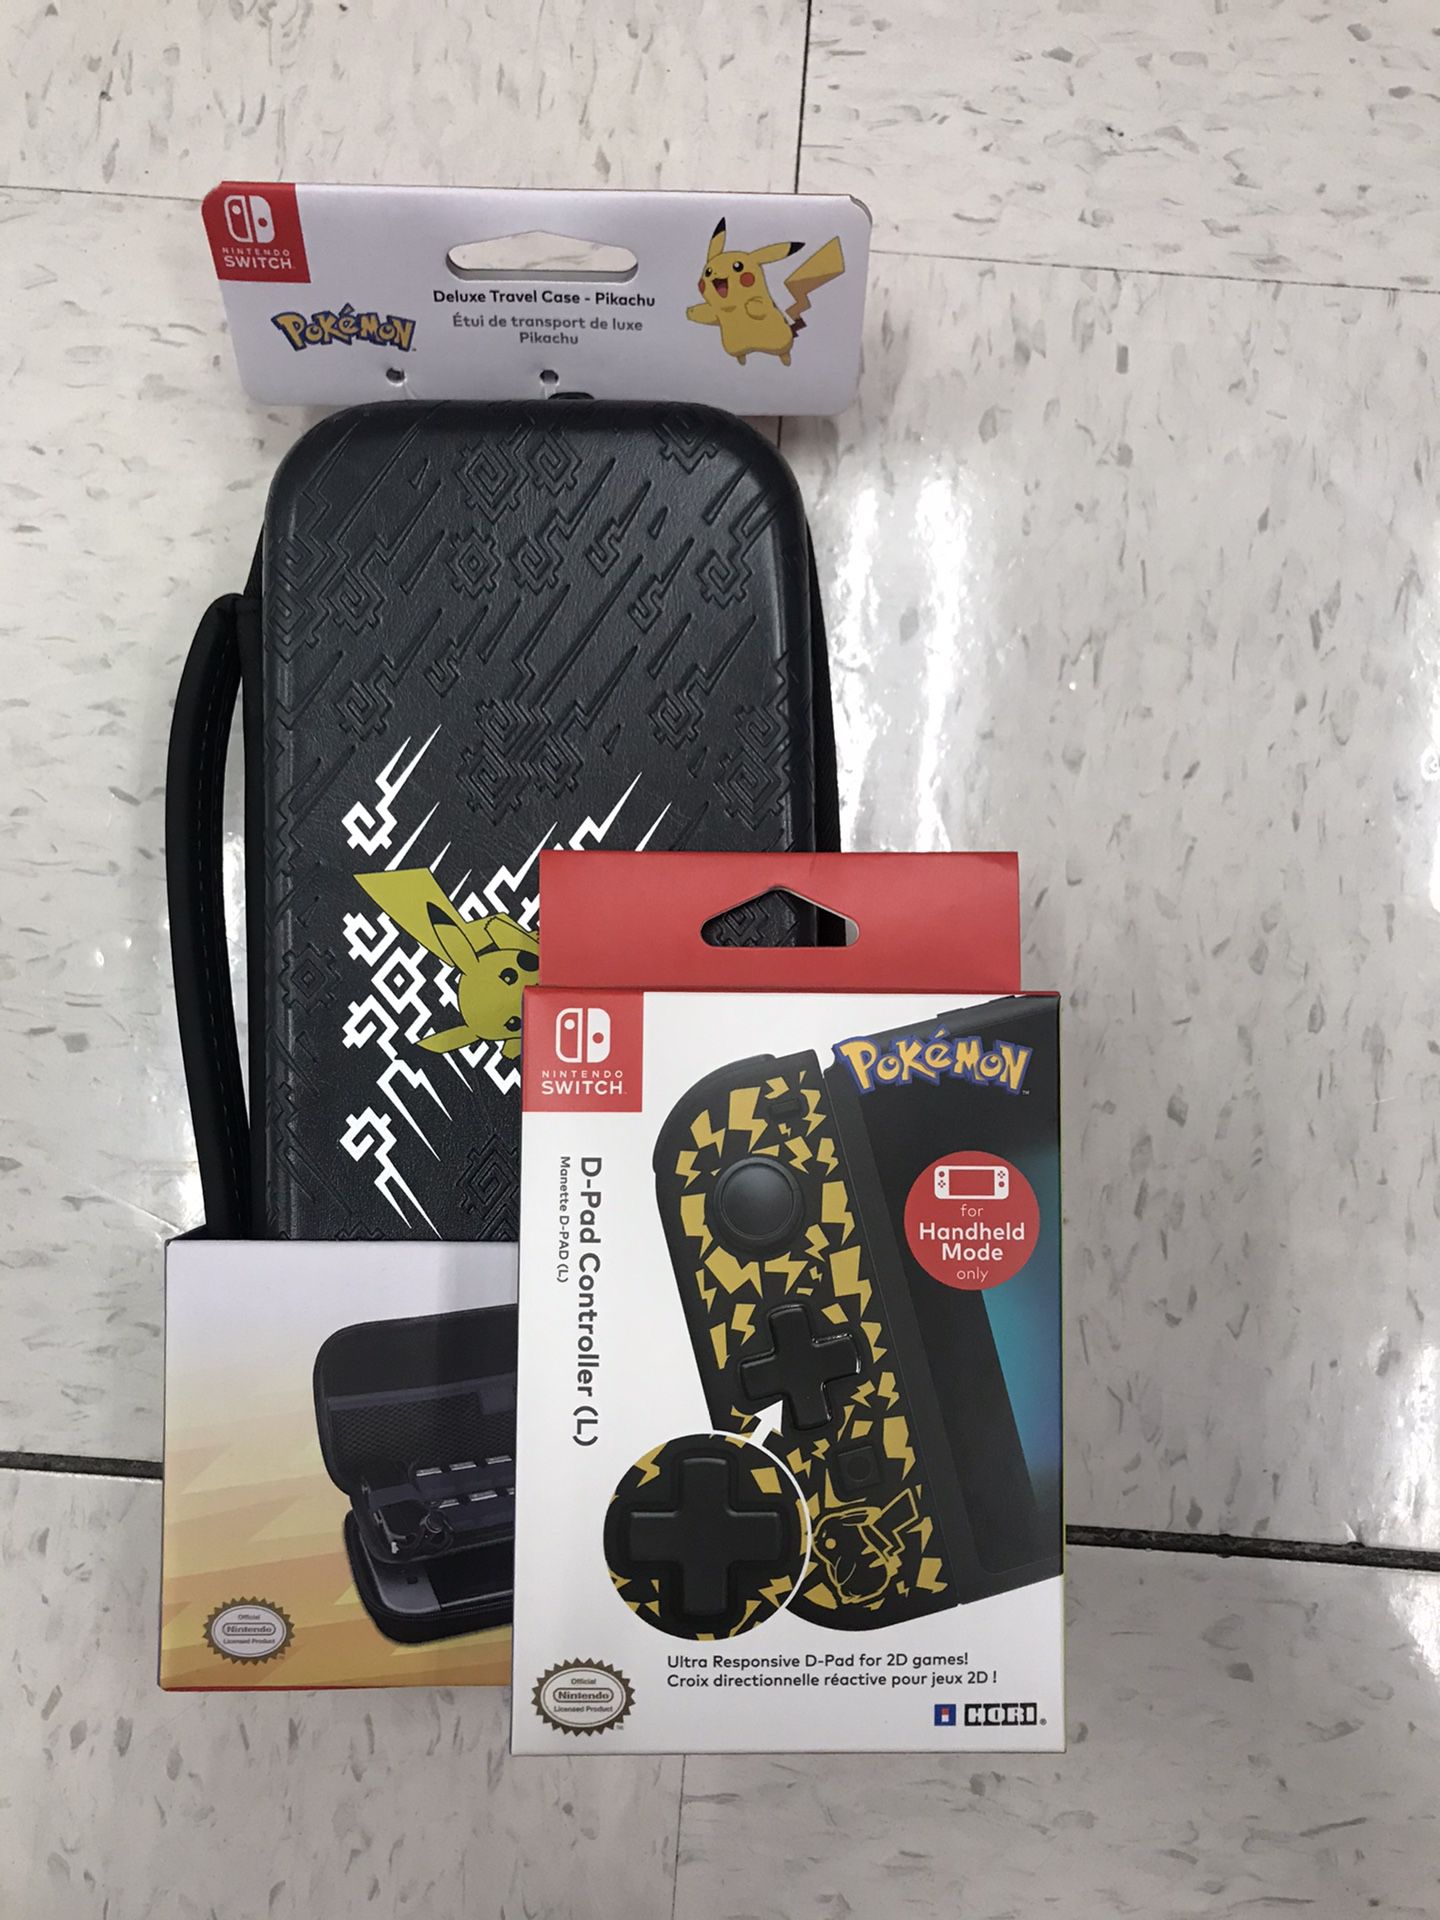 Pikachu Deluxe Travel Nintendo Switch Case & Pokémon D-Pad Controller (L) Nintendo Switch